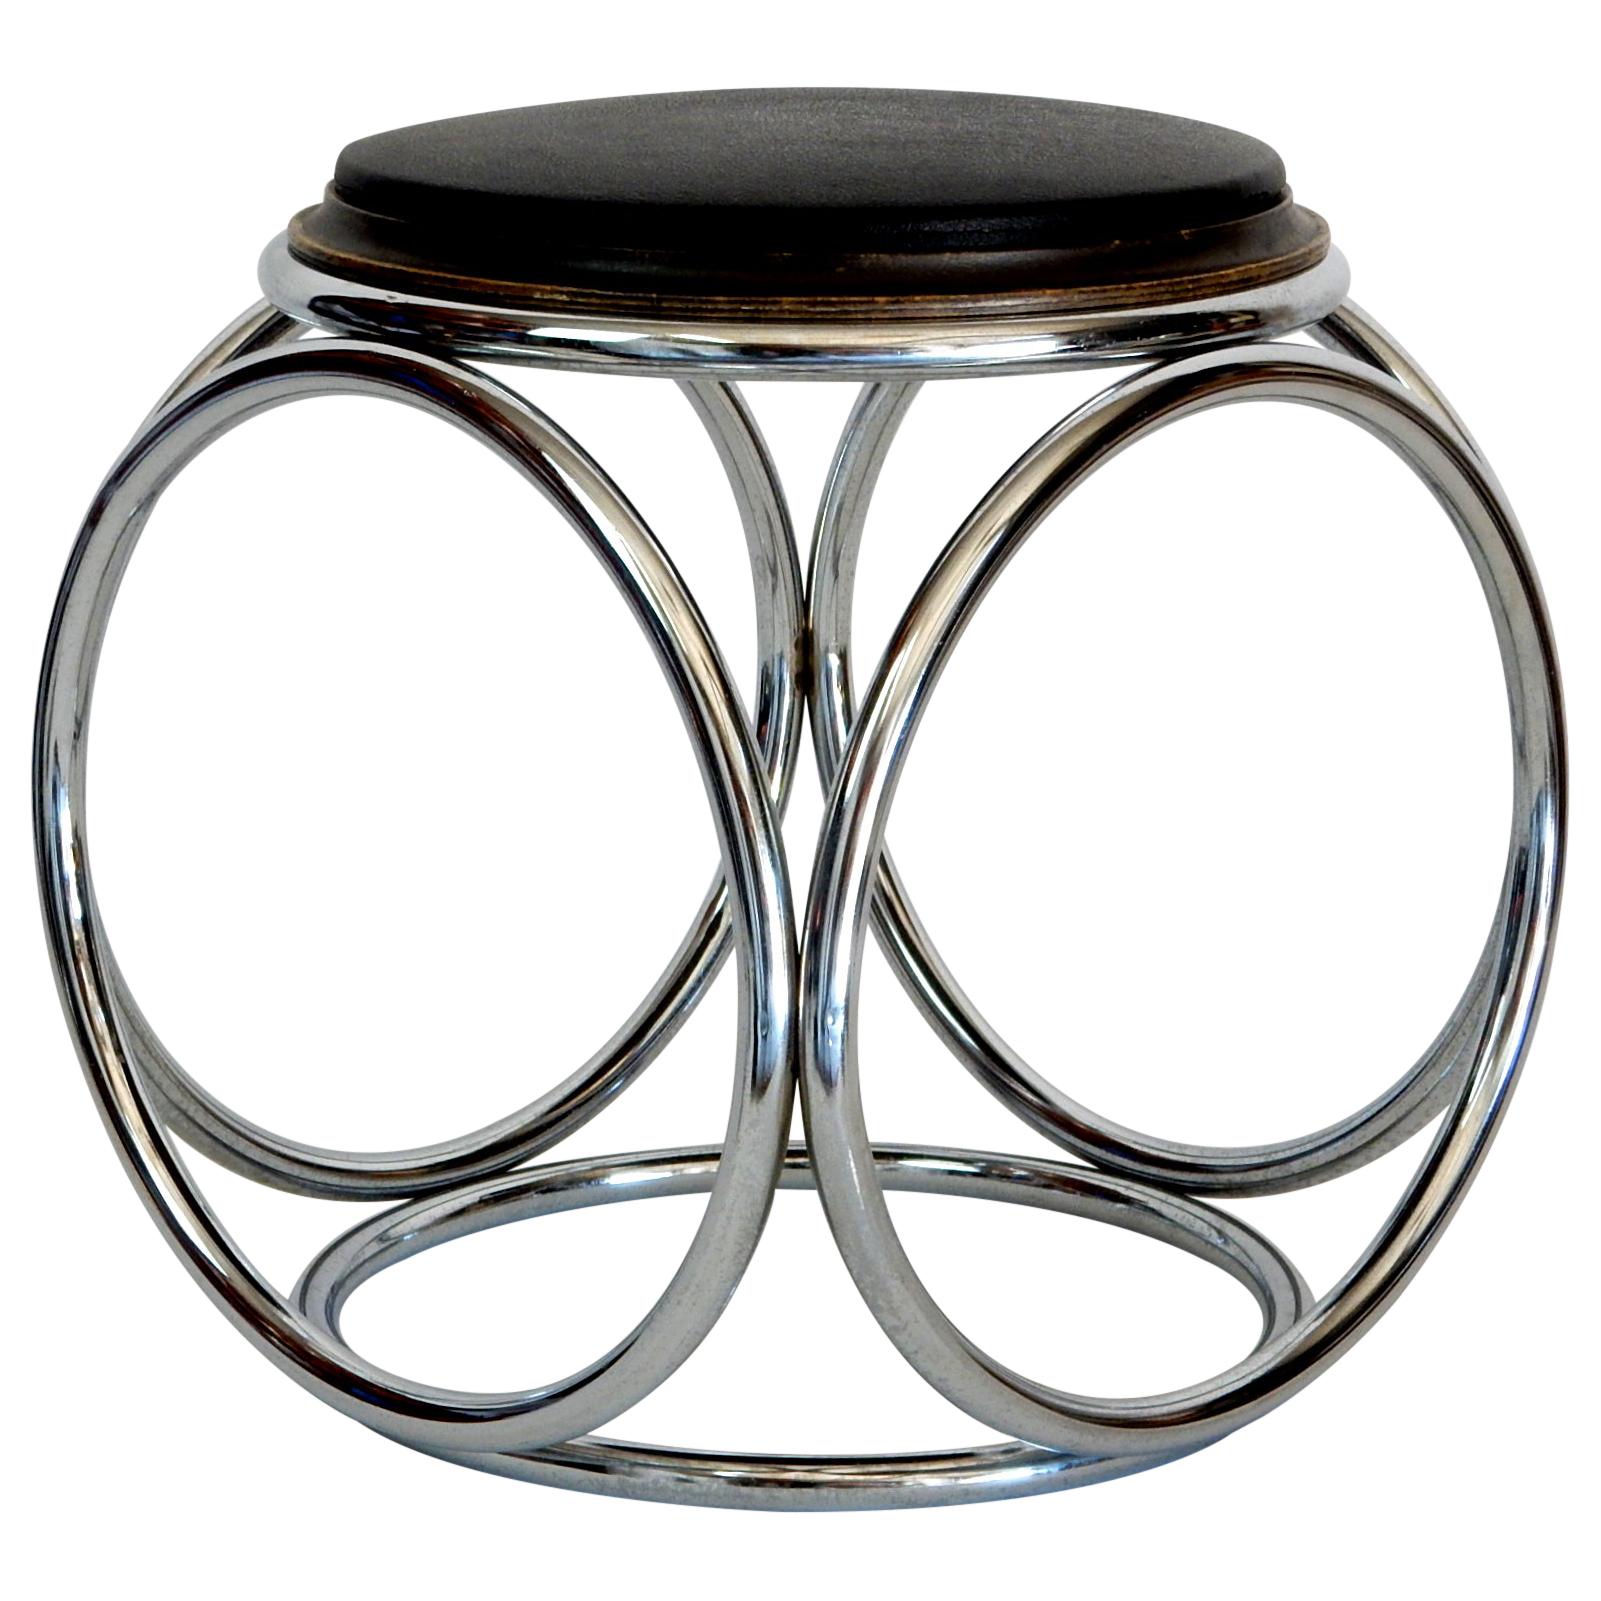 French Art Deco Jean-Pierre Laporte Design Tubular Circle Stool or Table  For Sale at 1stDibs | jean-pierre laporte